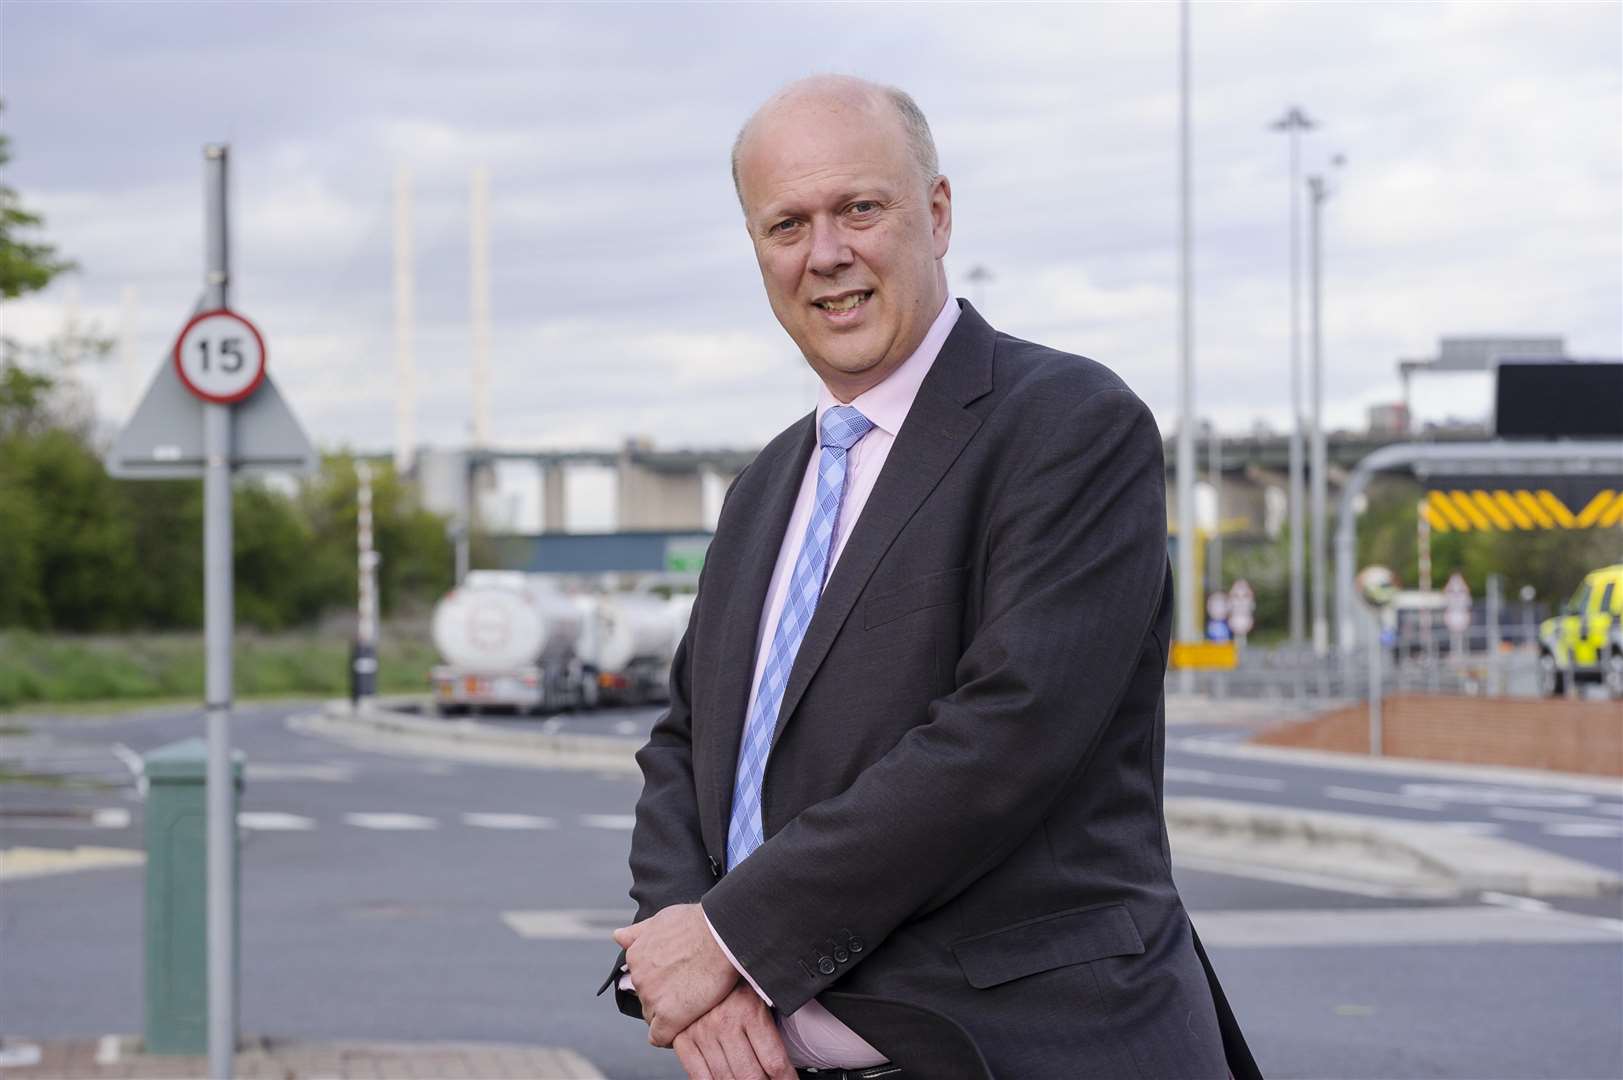 Transport Secretary Chris Grayling